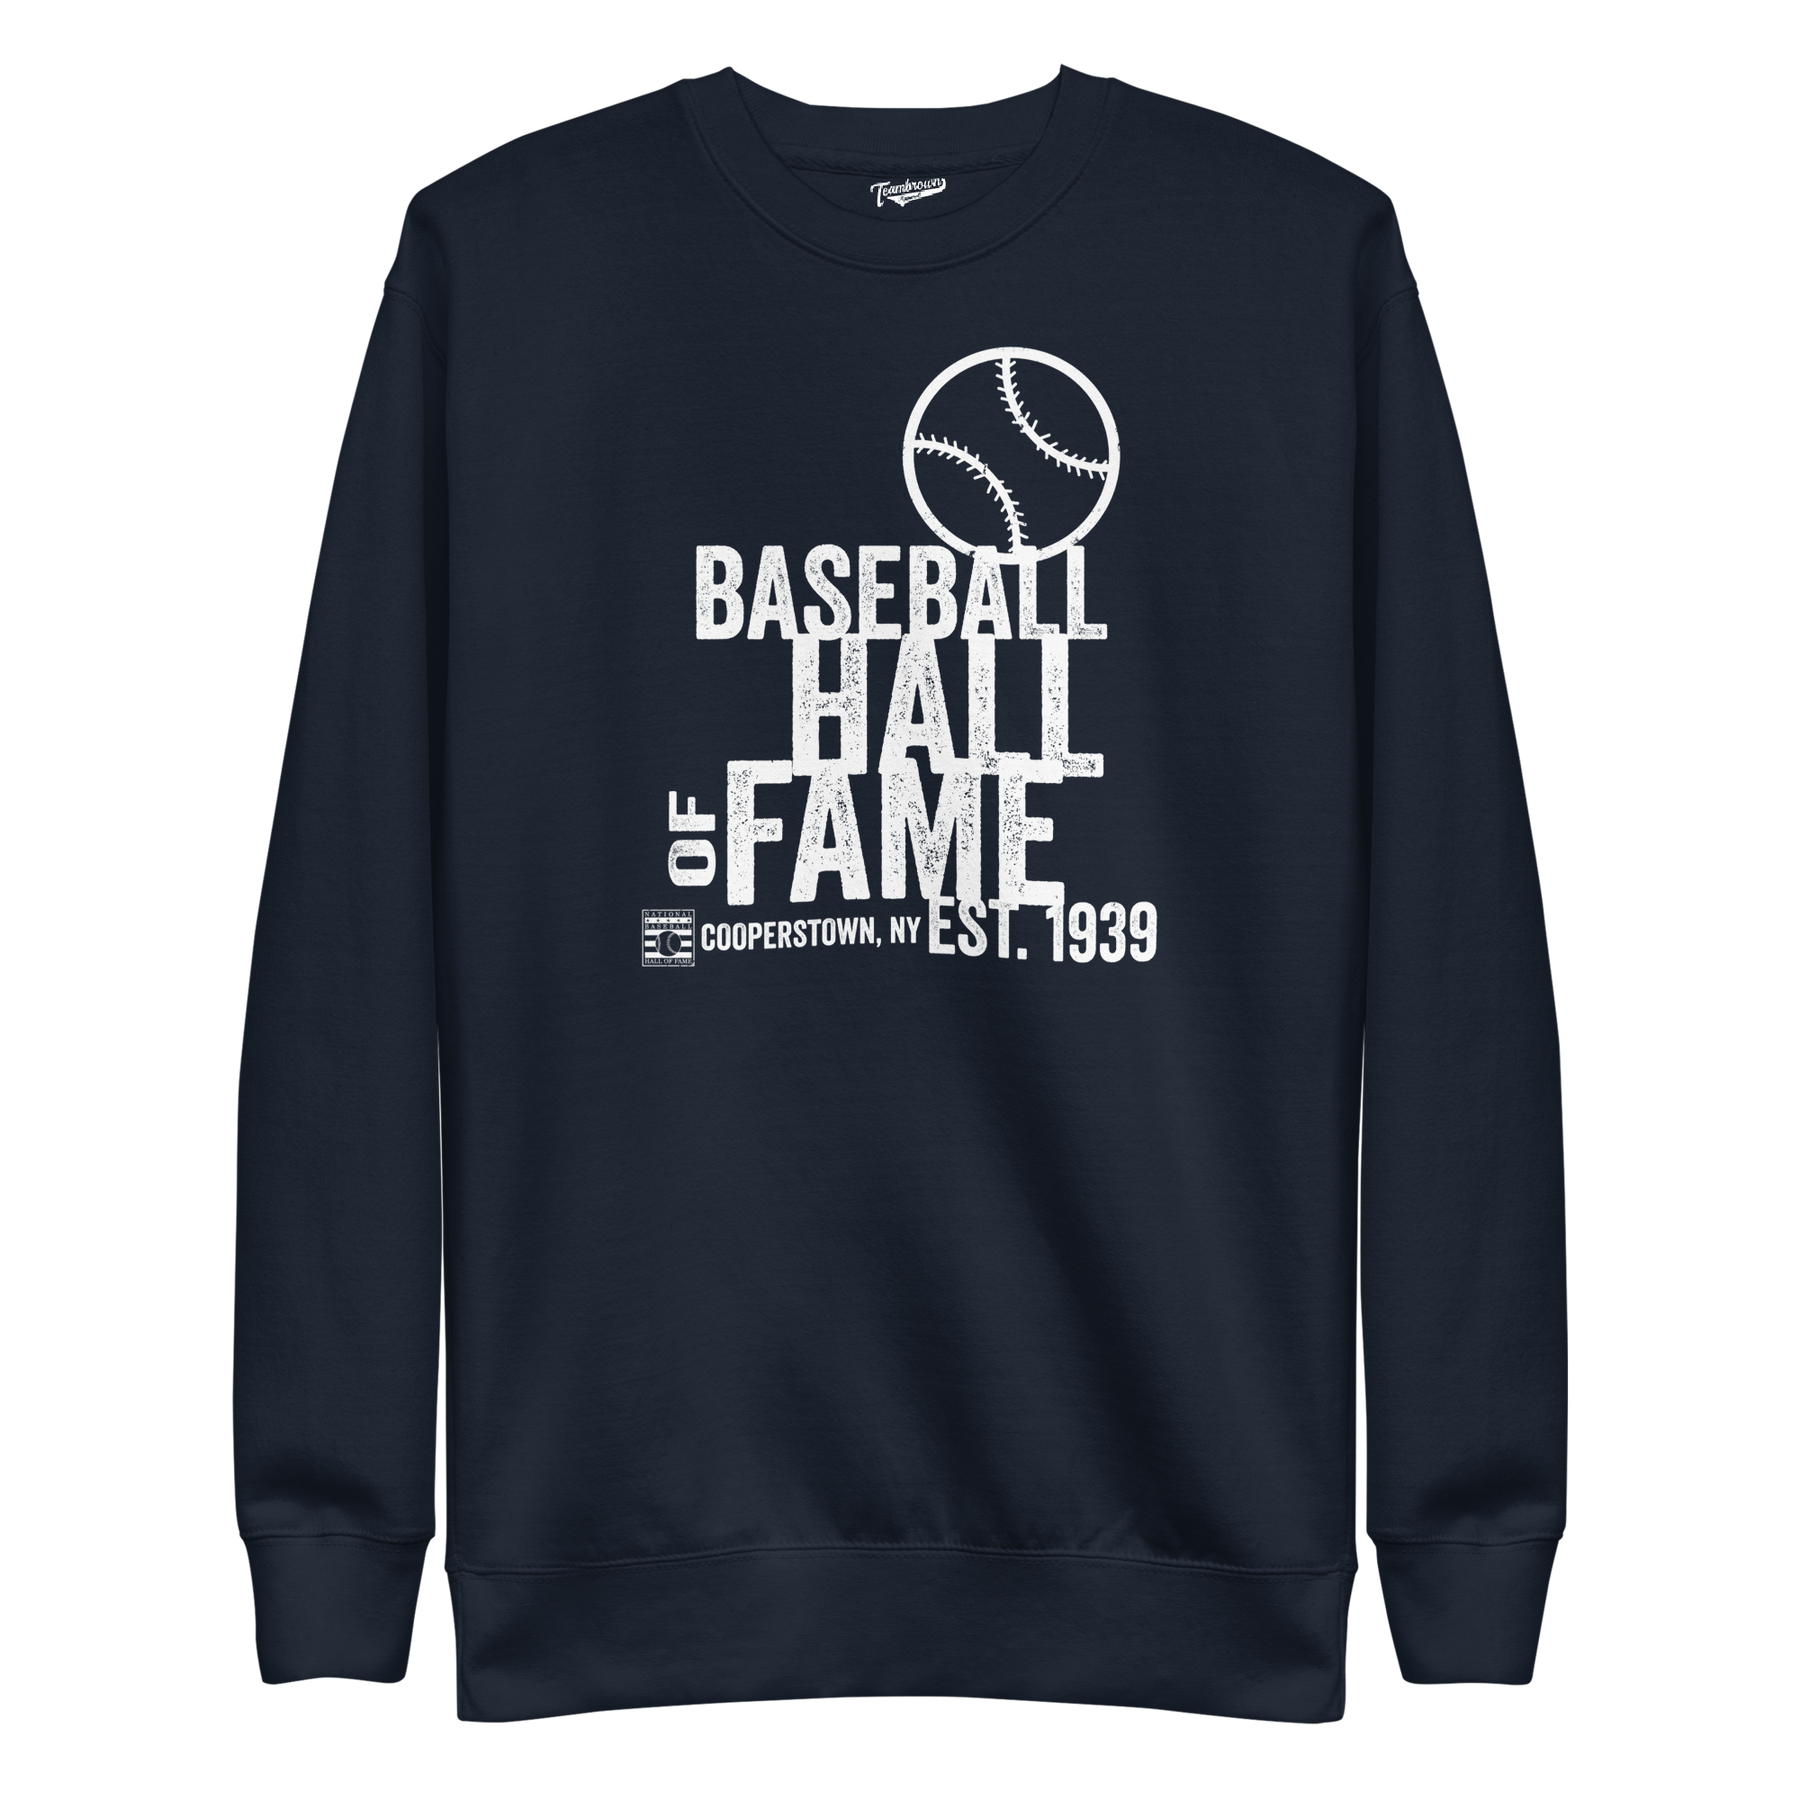 Baseball Hall of Fame - Retro - Crewneck Sweatshirt